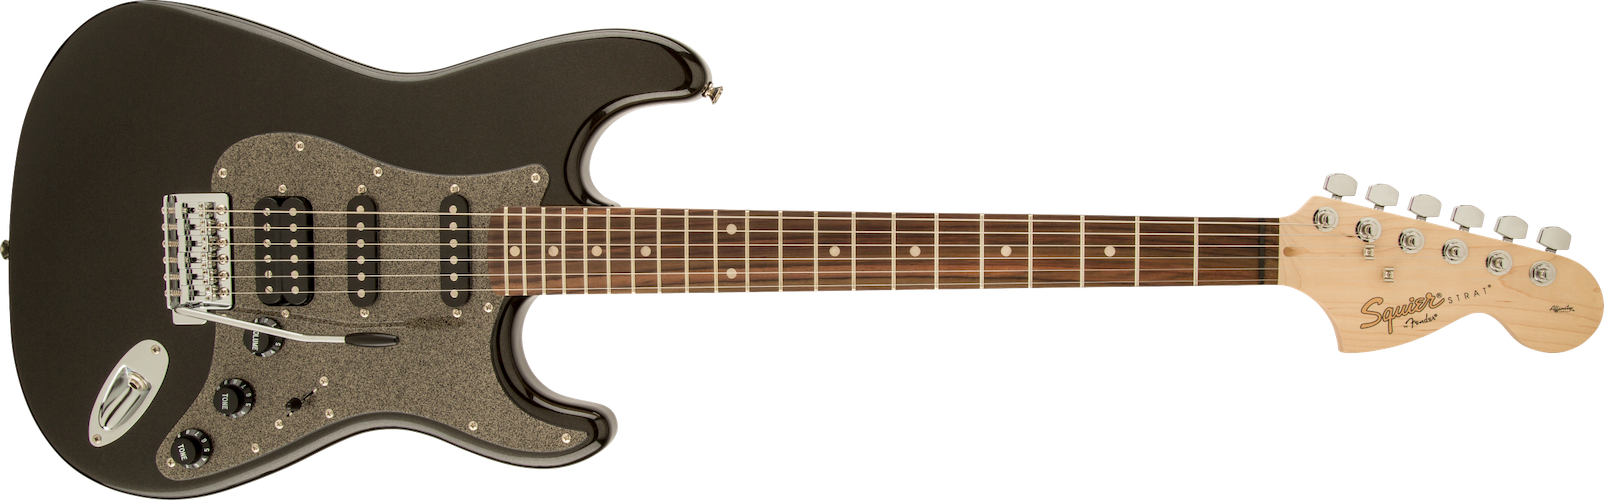 Fender Squier Affinity Series Stratocaster HSS, Montego Black Metallic